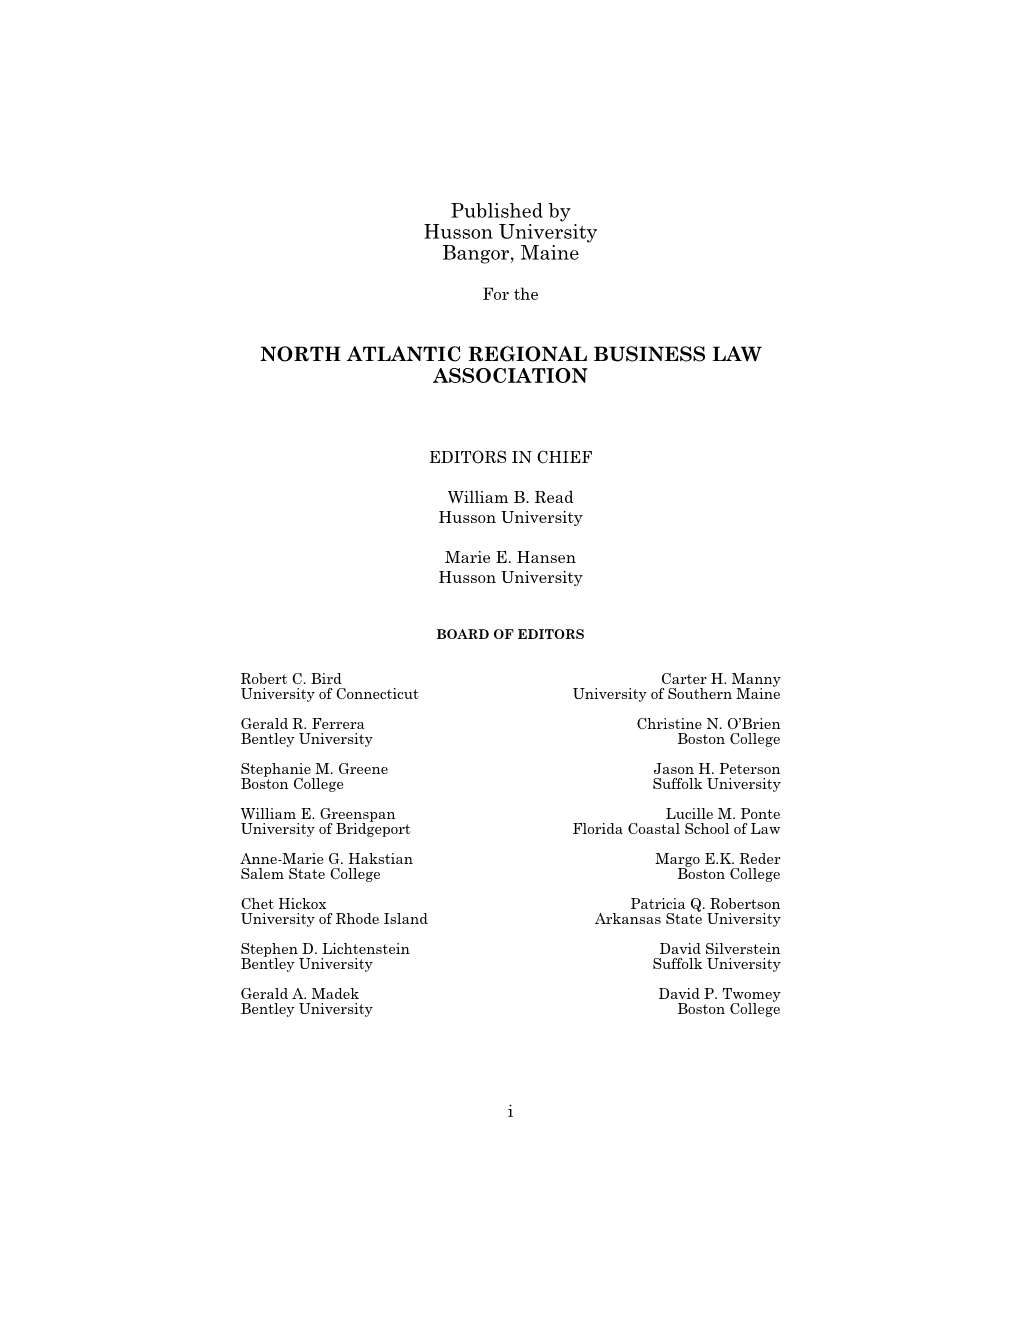 North Atlantic Regional Business Law Association